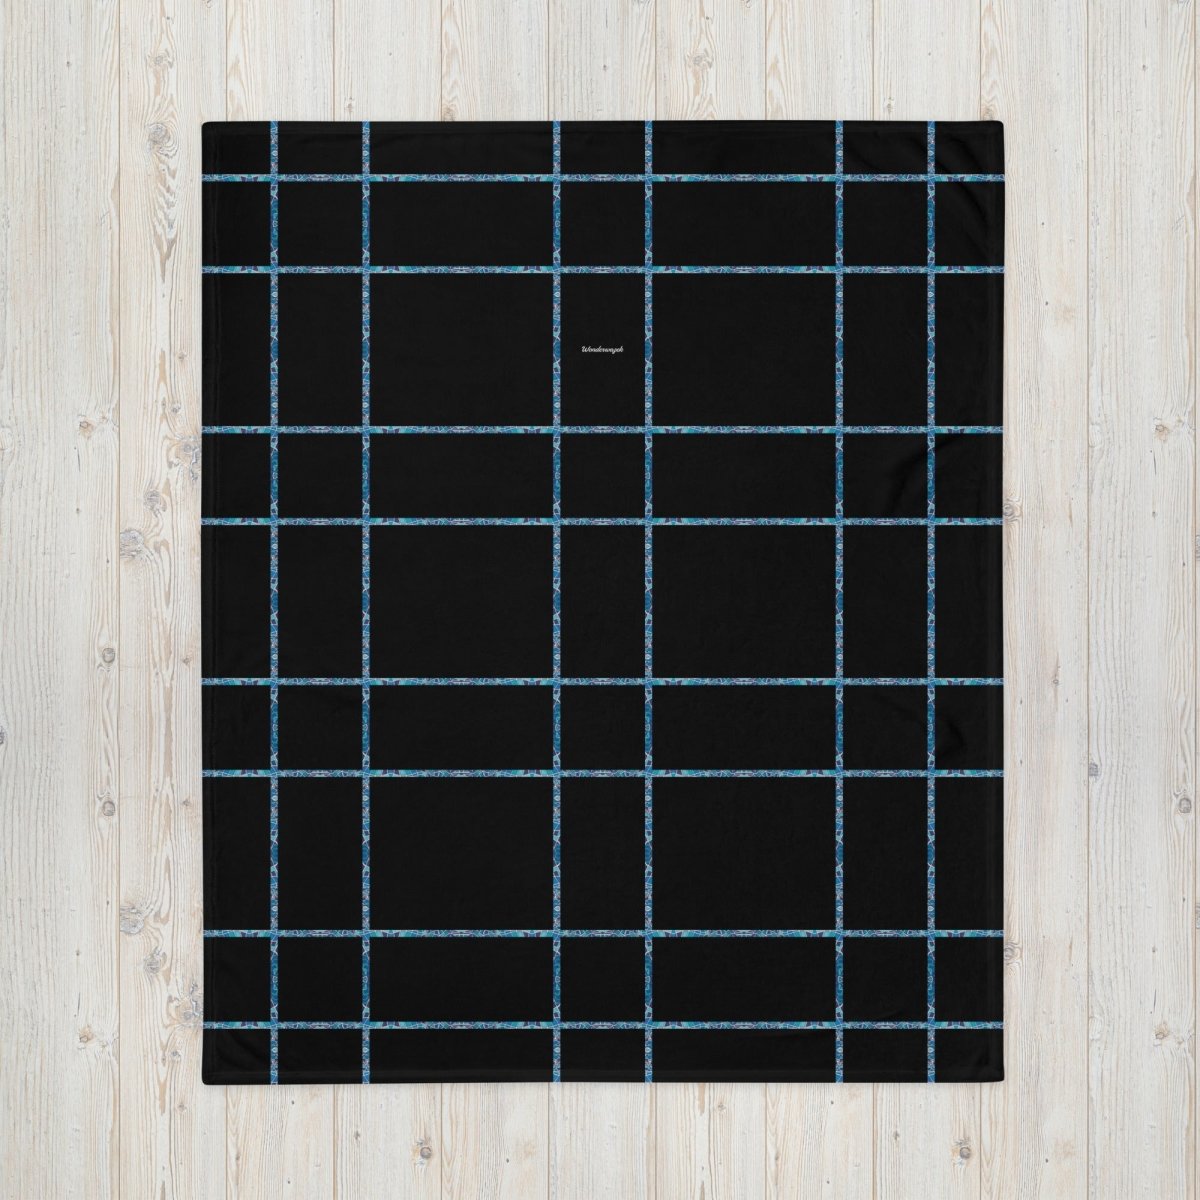 Decke • dezente Linien – blau, schwarz - Wonderwazek